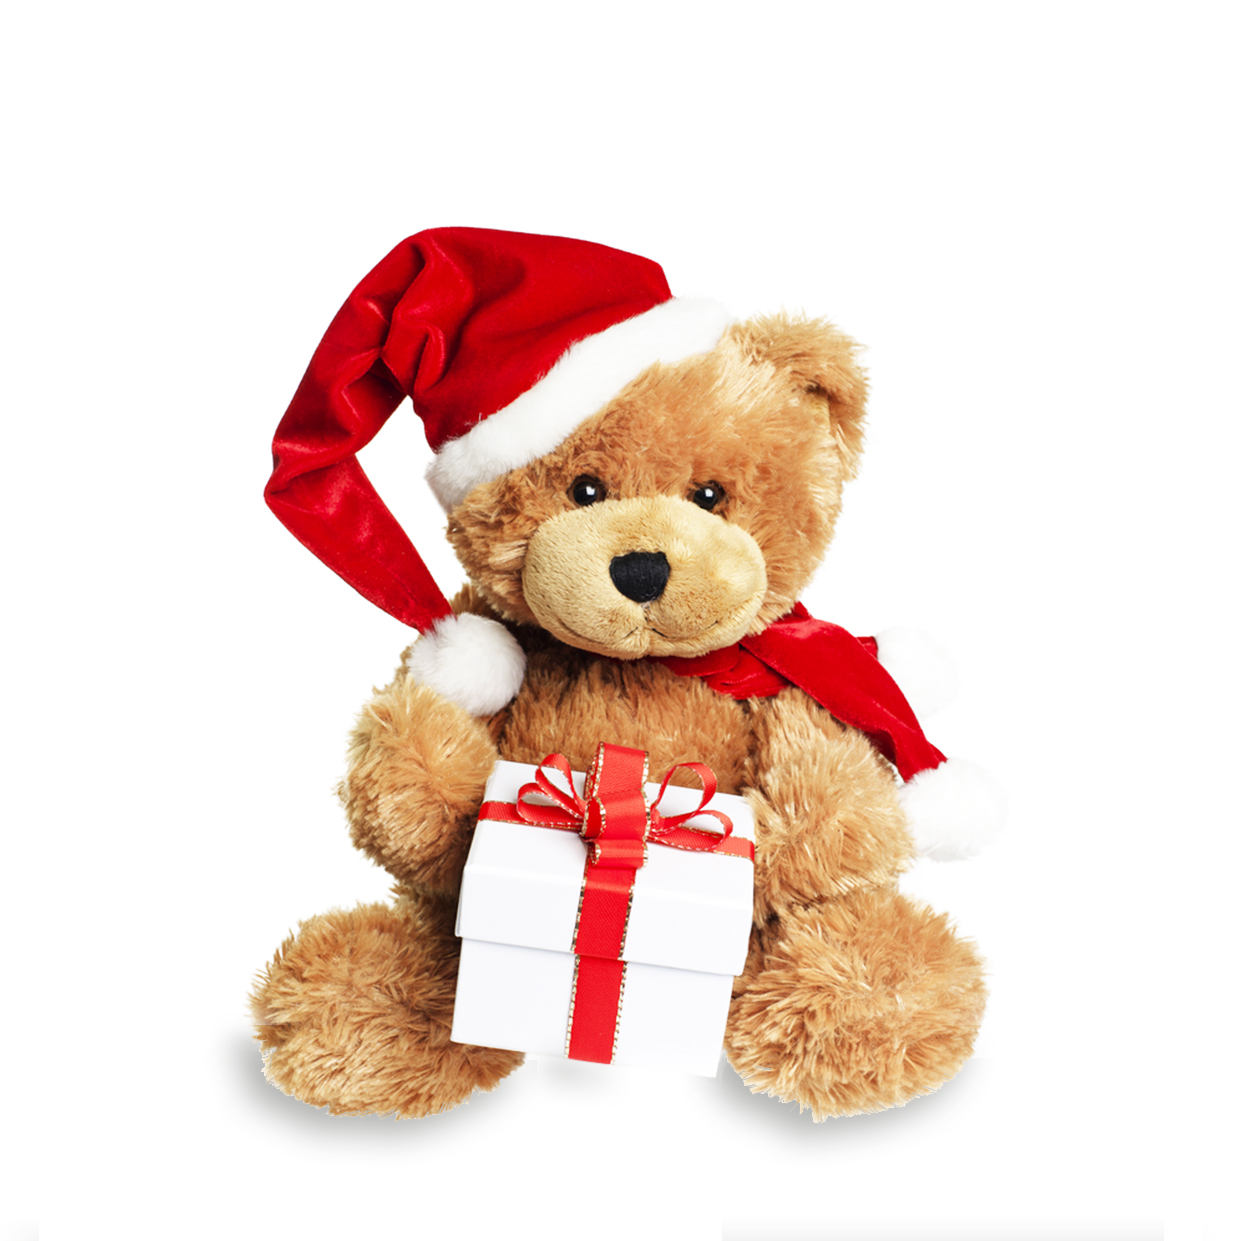 Christmas Teddy - sent on November 24th, 2022